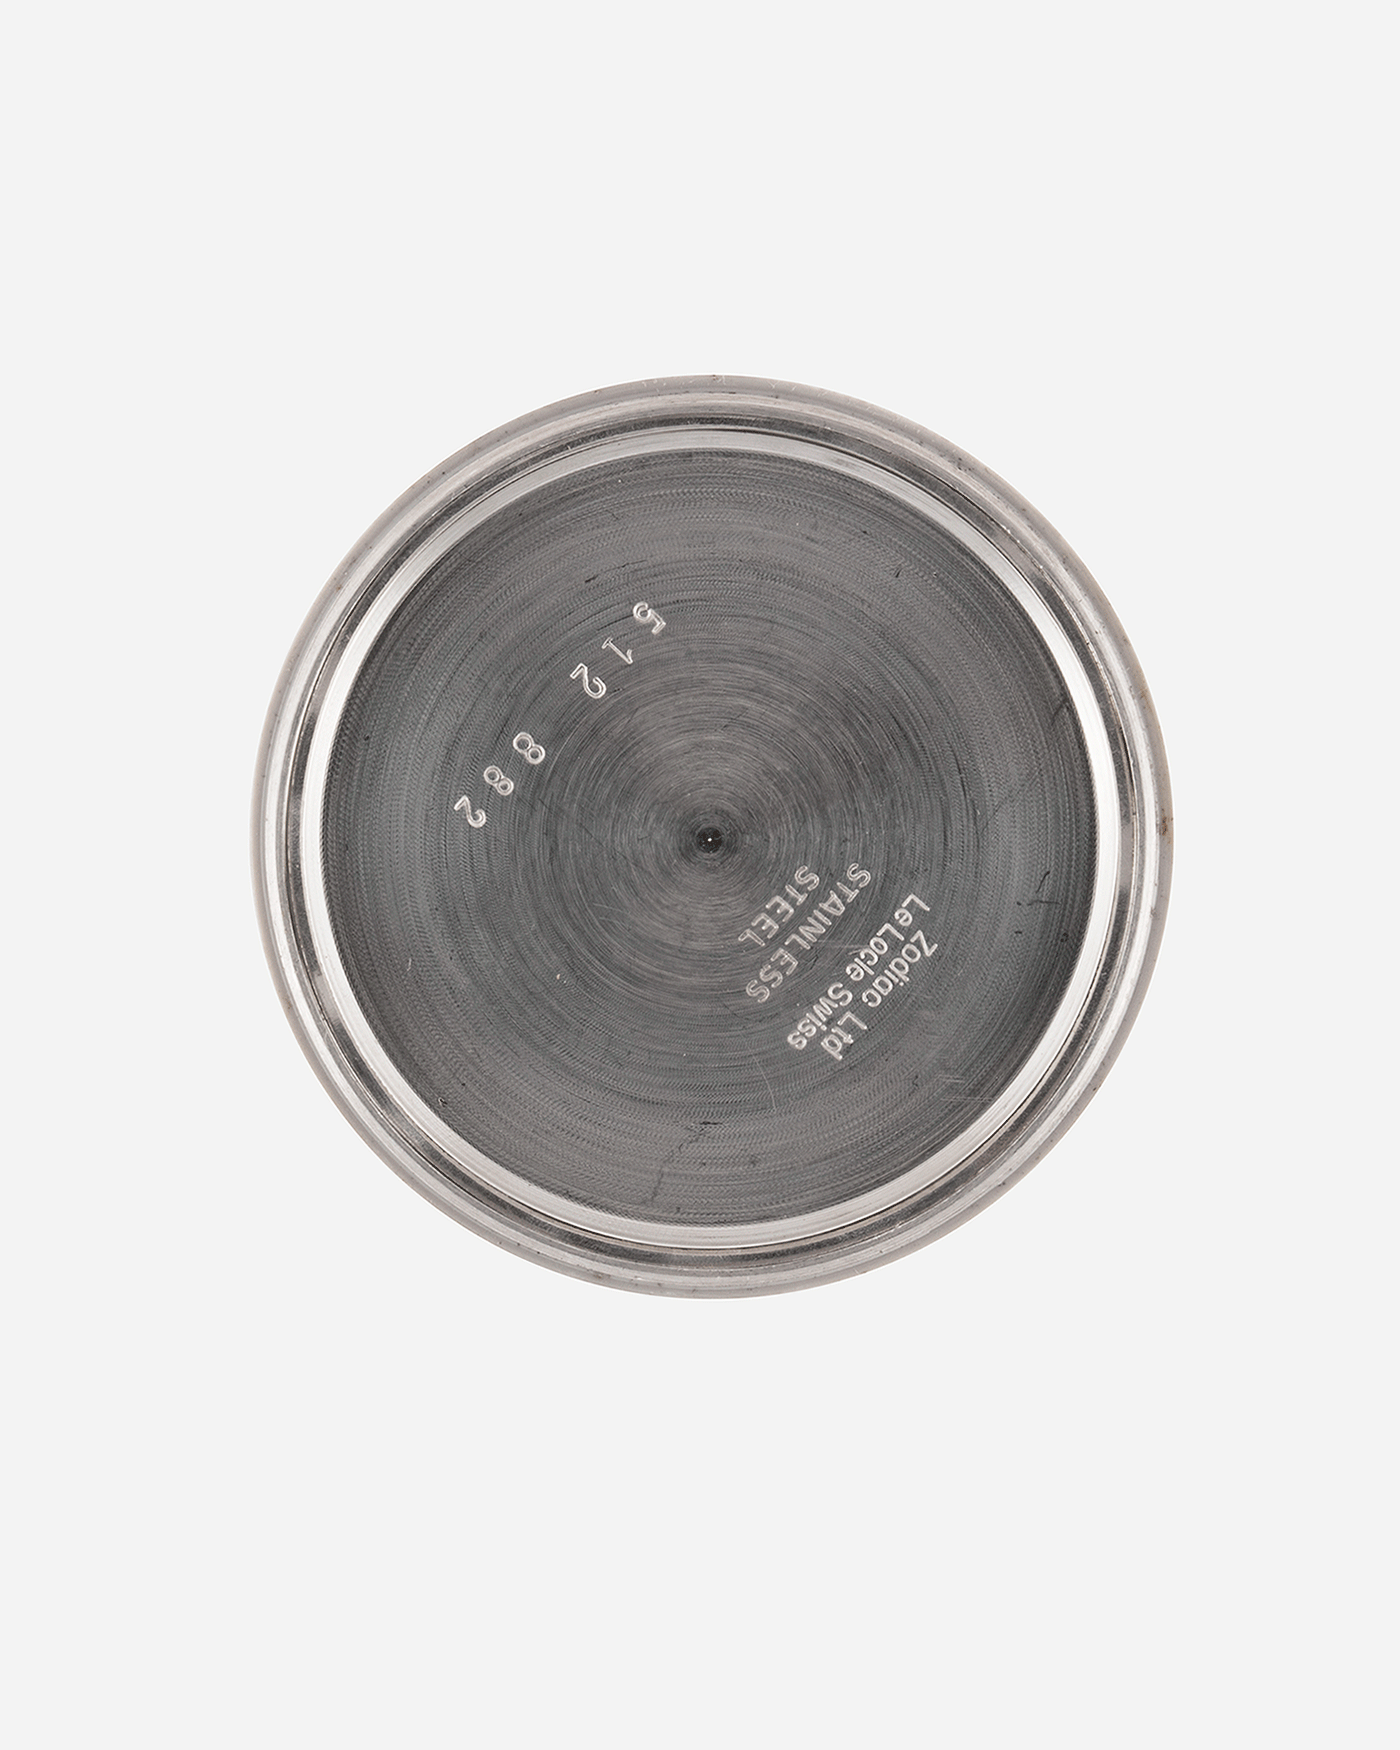 Brand: Zodiac Year: 1960’s Model: Reverse Panda Chronograph Material: Stainless Steel Movement: Valjoux 72 Case Diameter: 36mm Lug Width: 19mm Bracelet/Strap: Molequin Chocolate Brown Smooth Calf